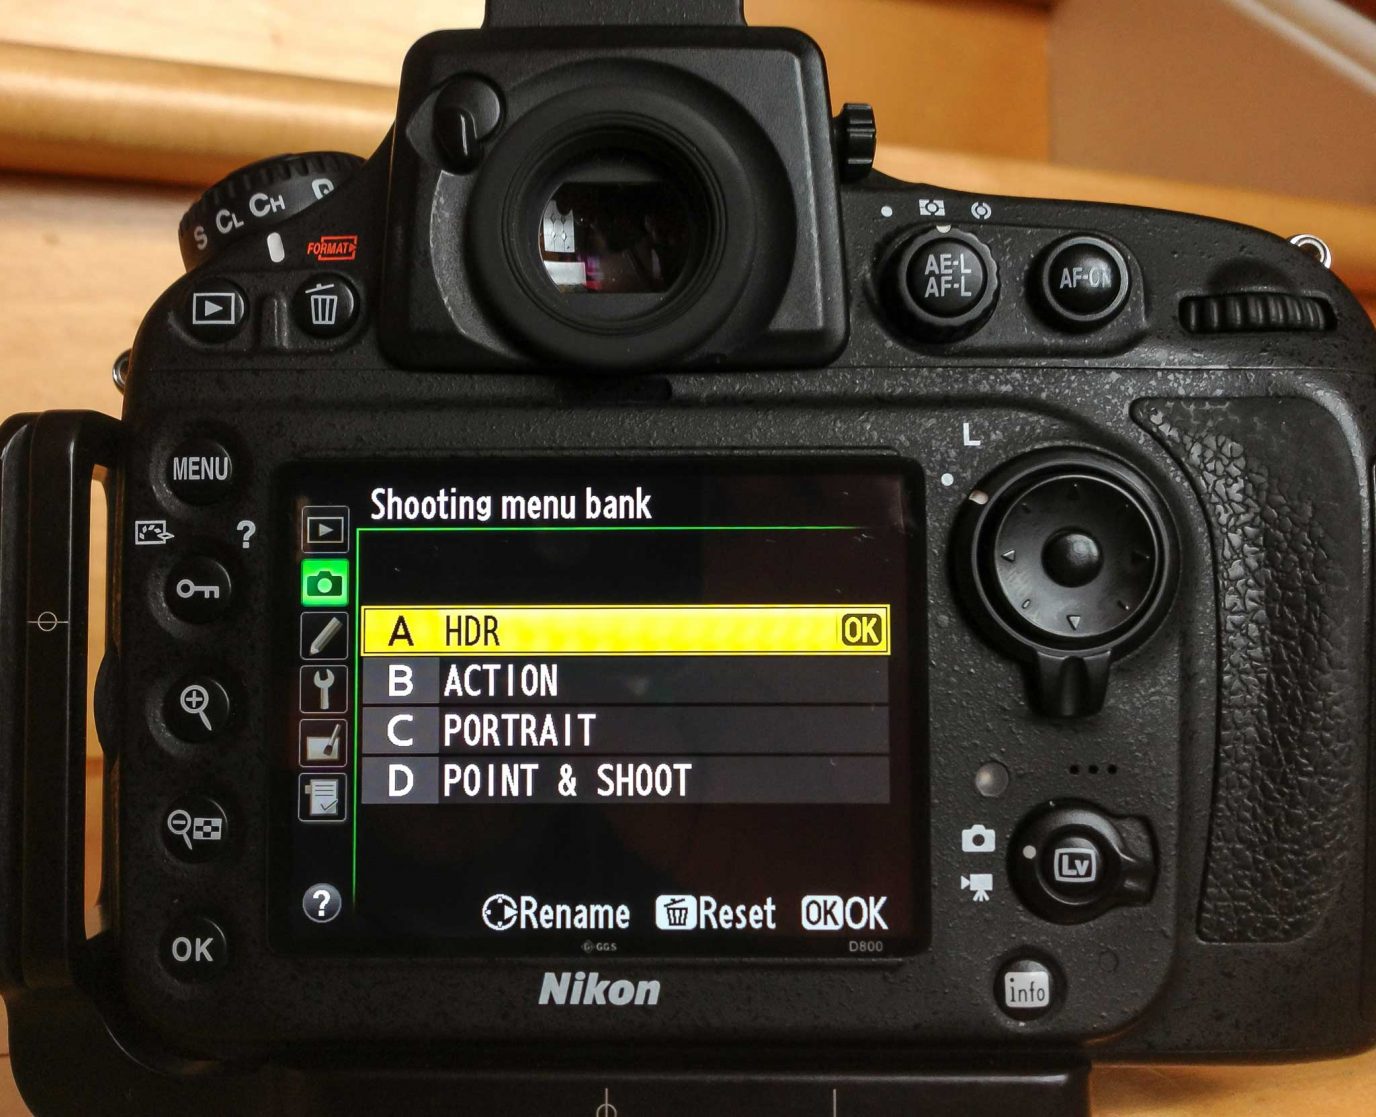 Nikon D800 and D800E Setup and Configuration - Cutom Menu Banks